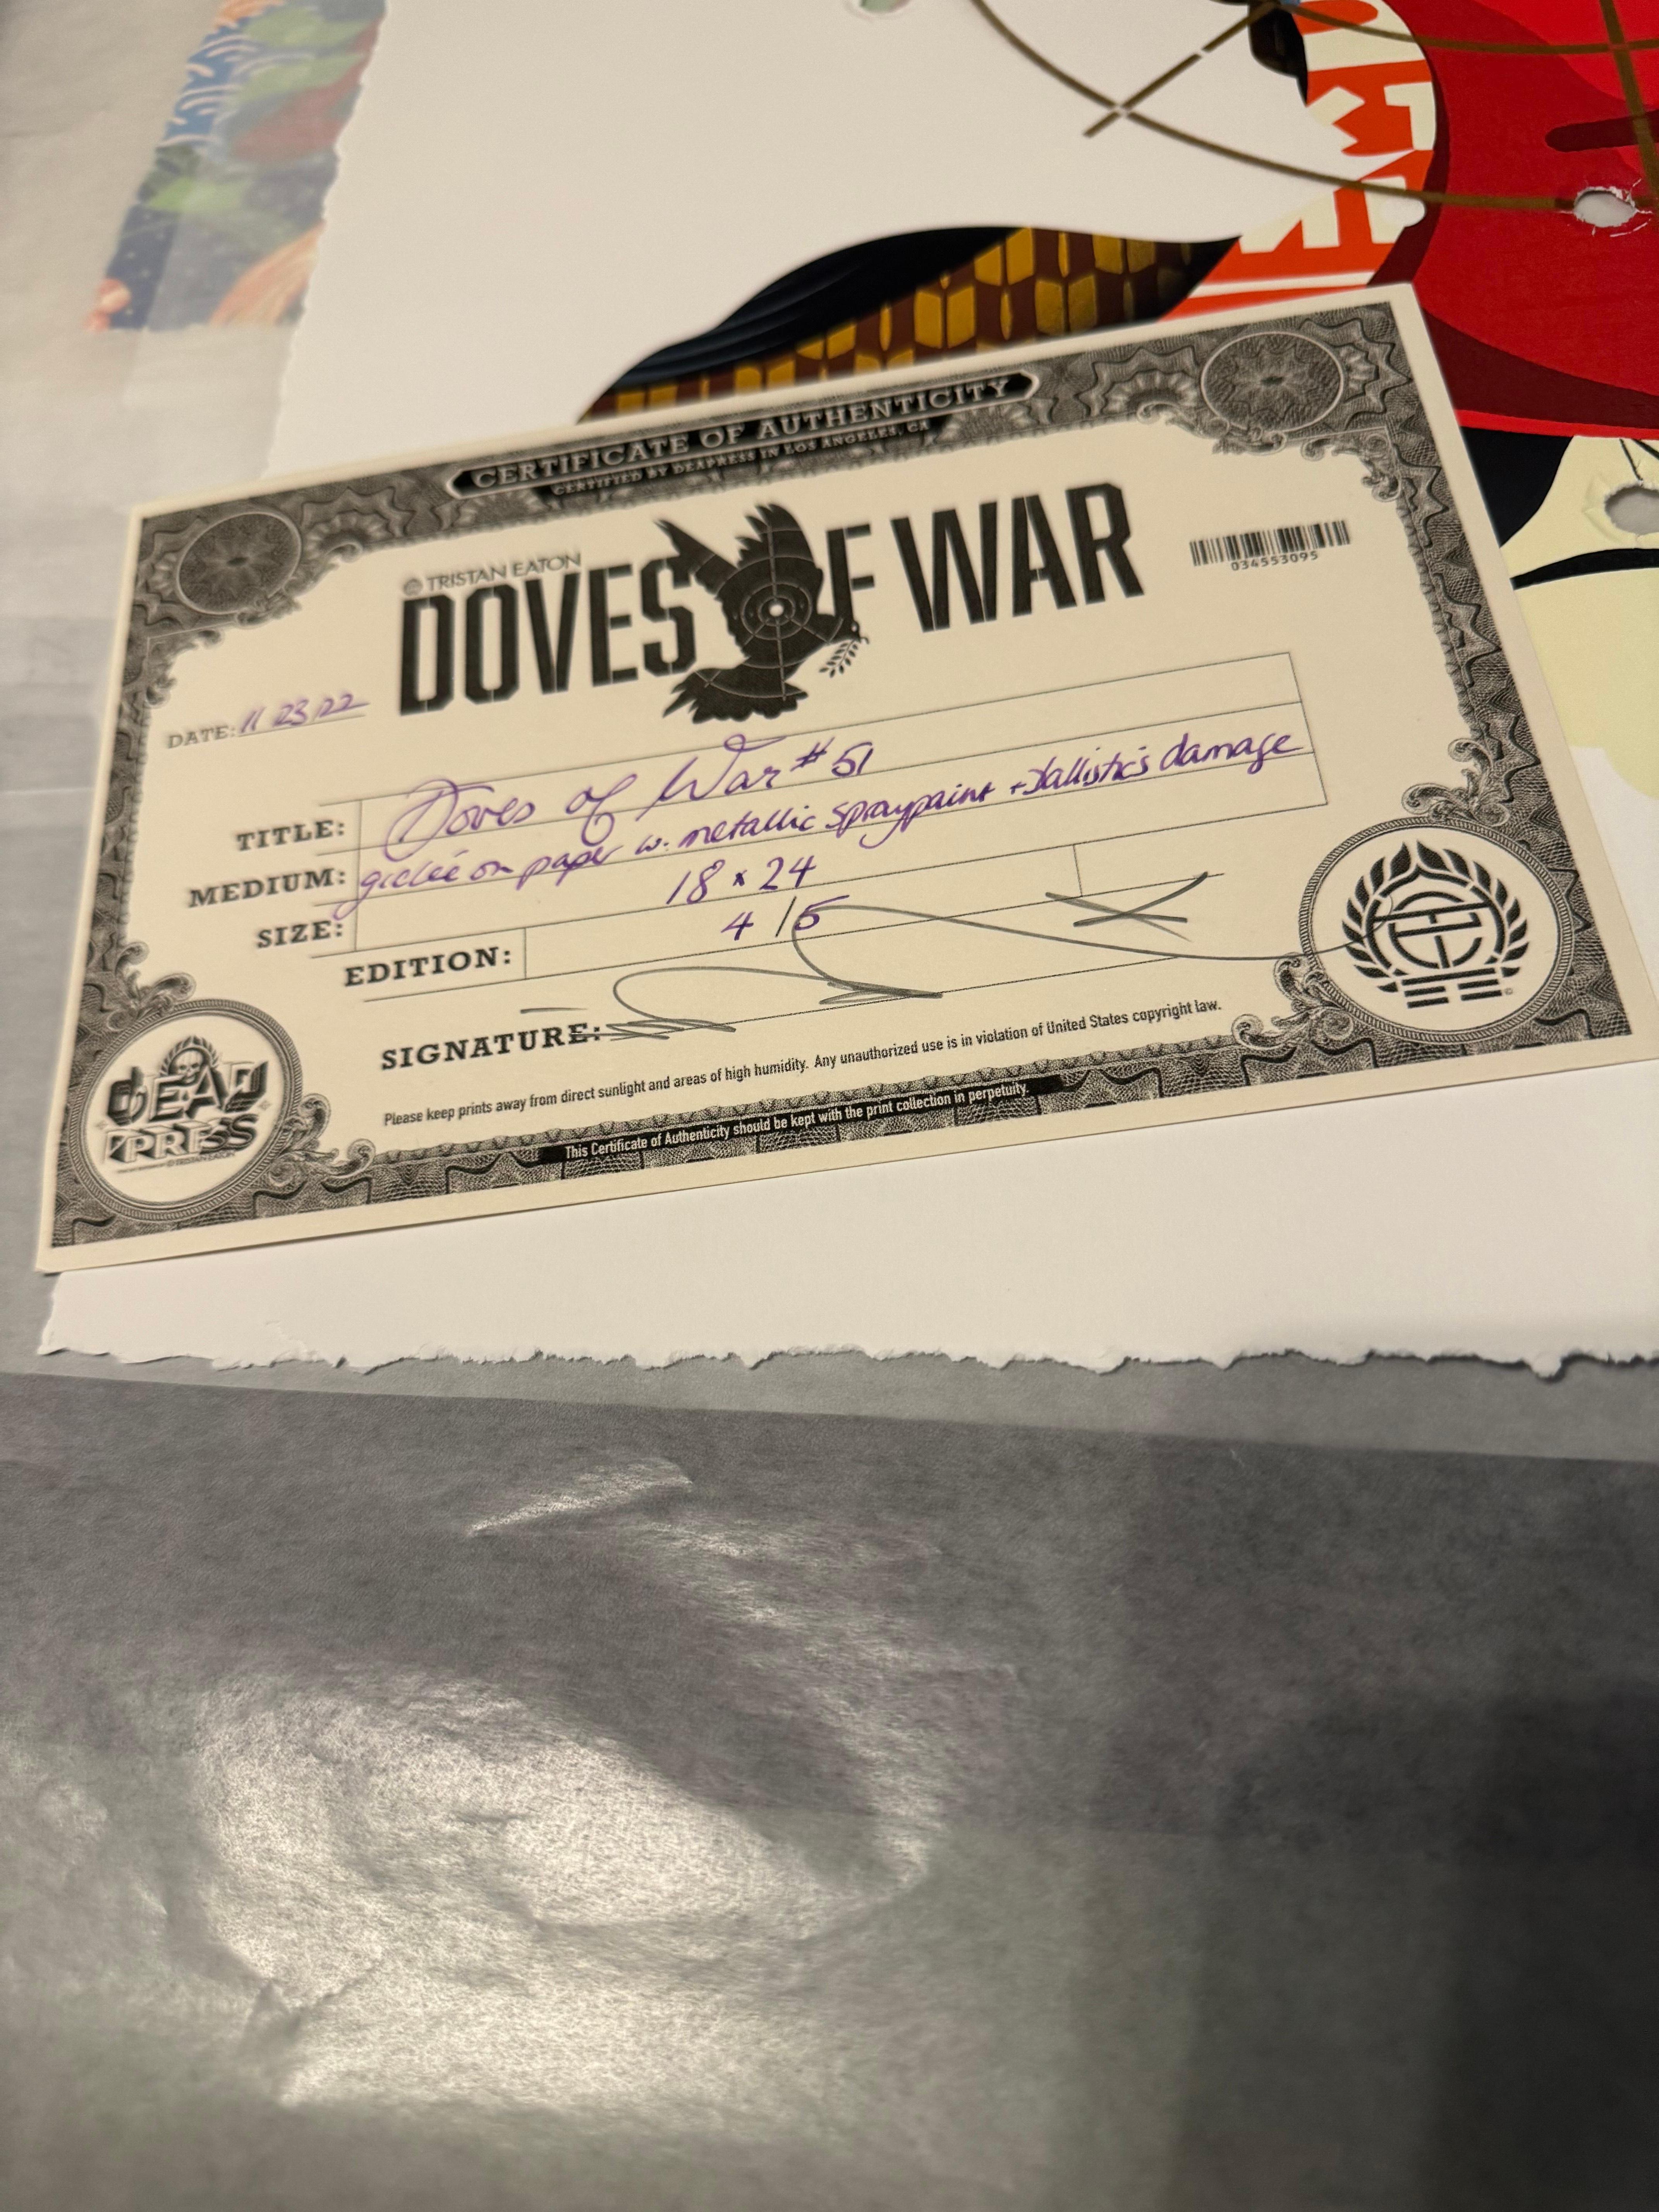 Doves of War #51 Spraypaint Embellished Screenprint Signed and Numbered For Sale 1